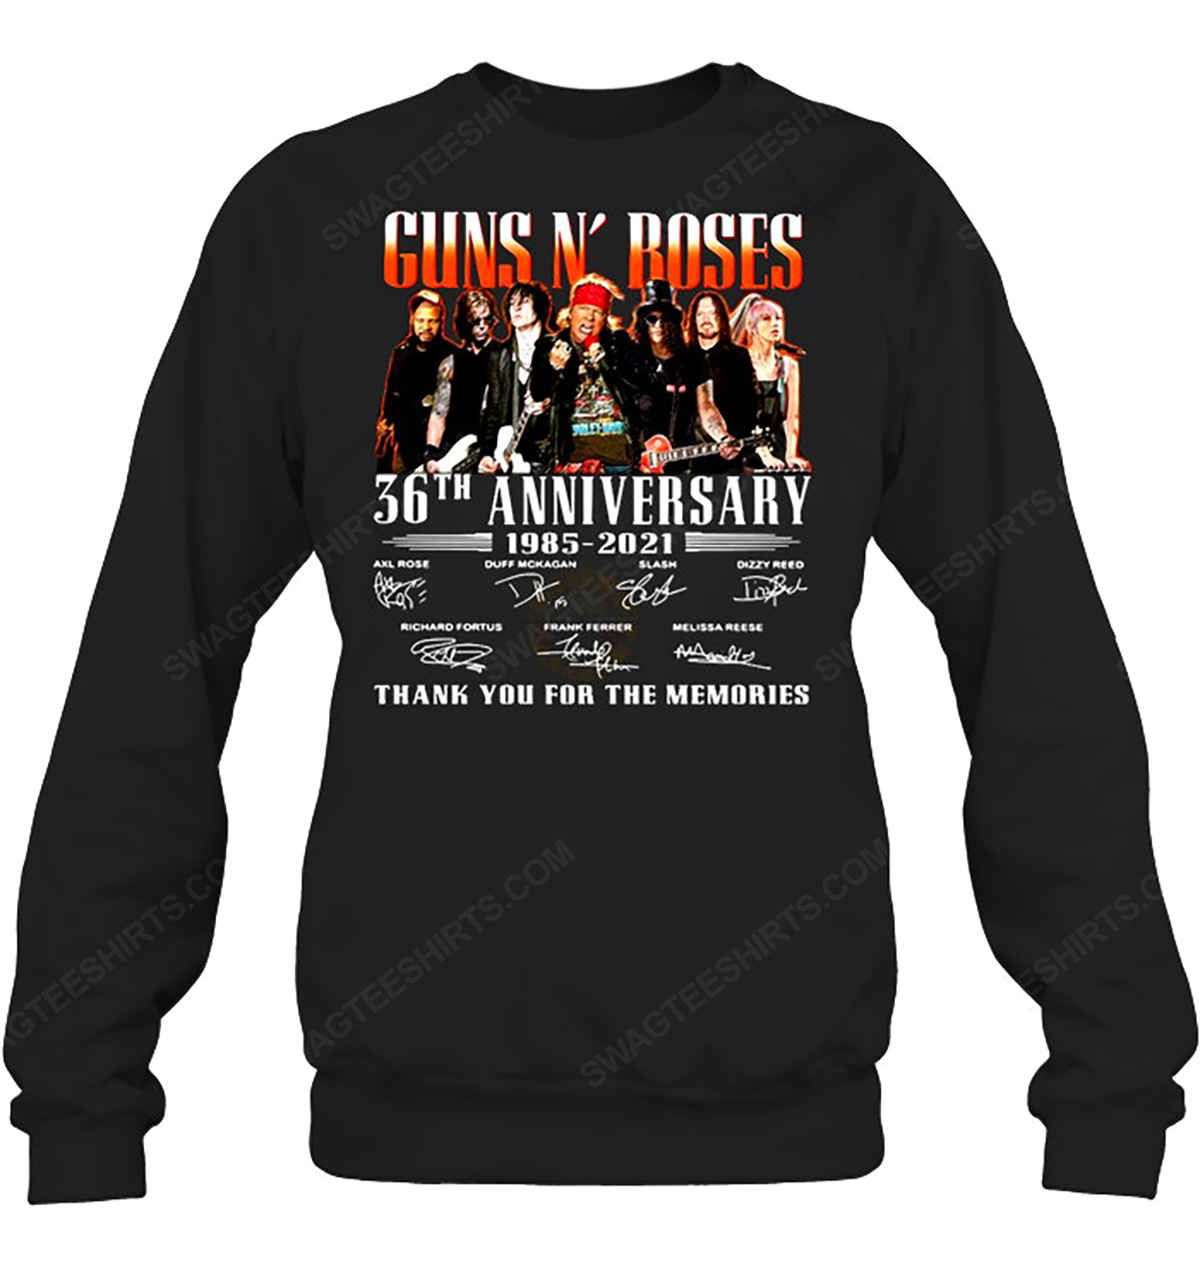 Guns n roses 35th anniversary thank you for memories sweatshirt 1